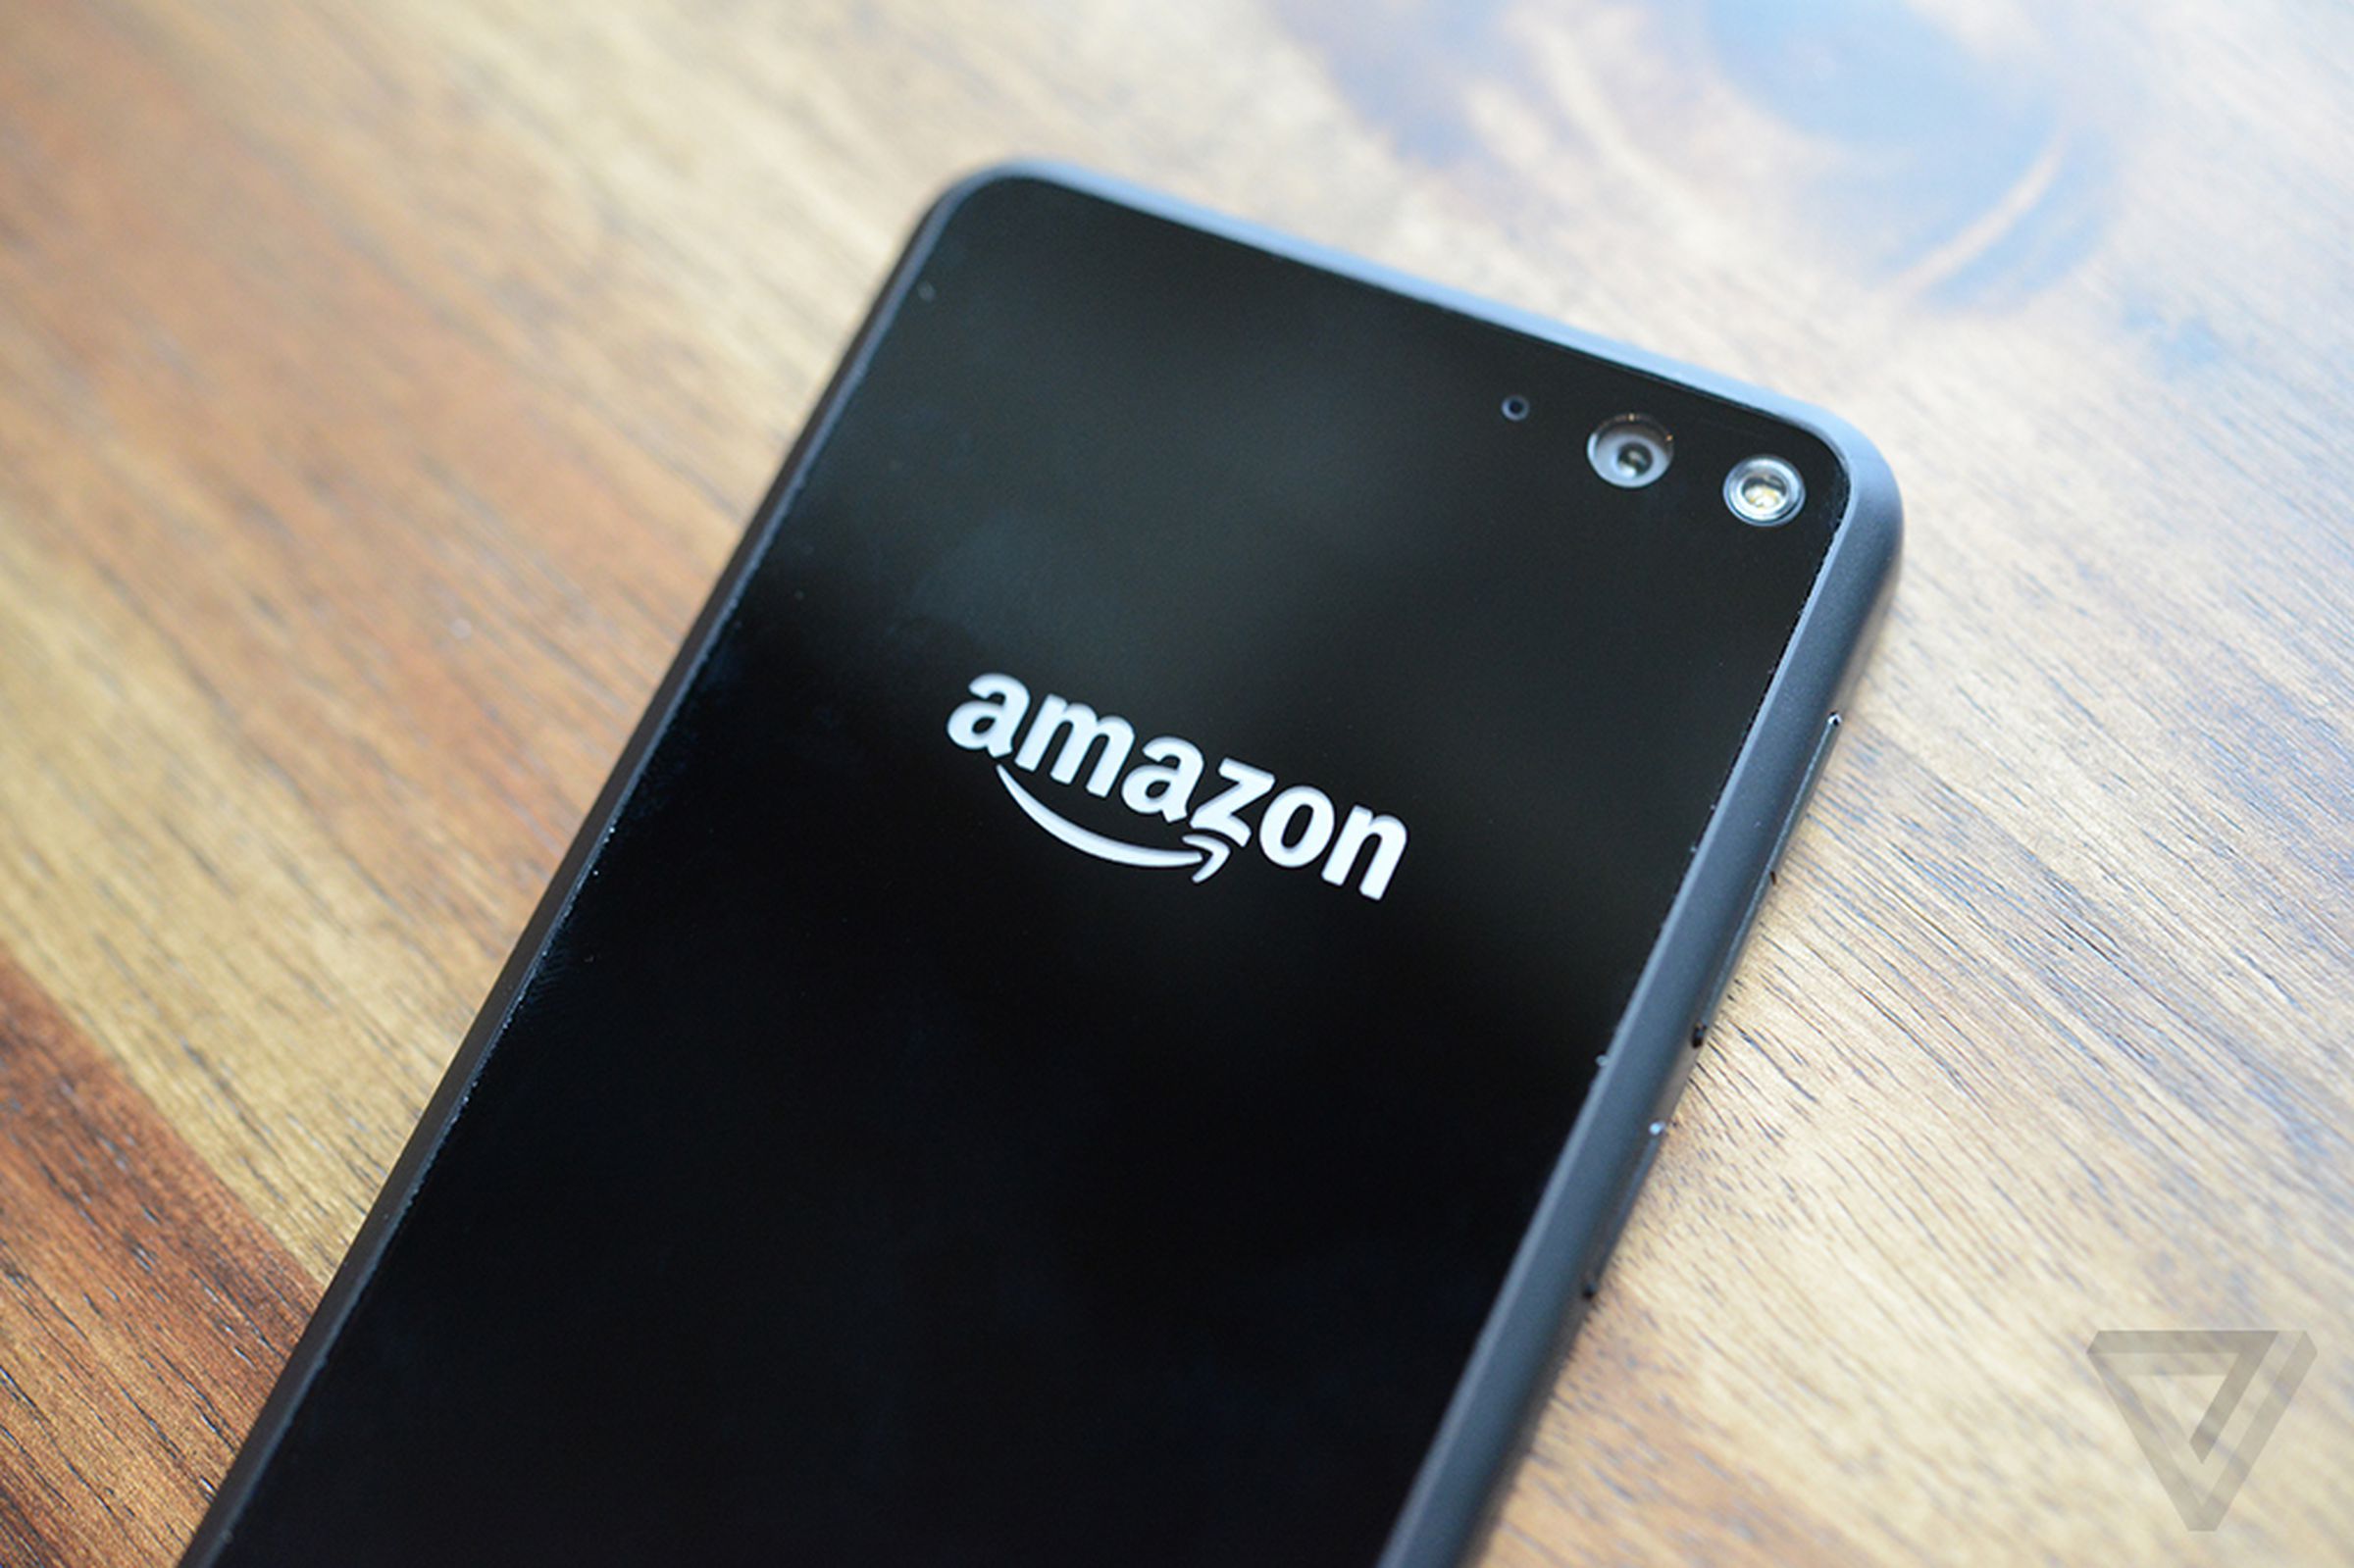 Amazon Fire Phone hands-on photos